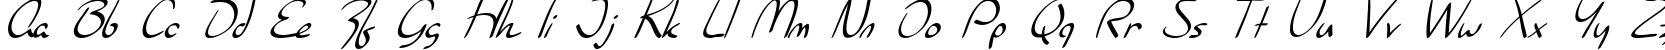 Пример написания английского алфавита шрифтом SF Burlington Script Italic